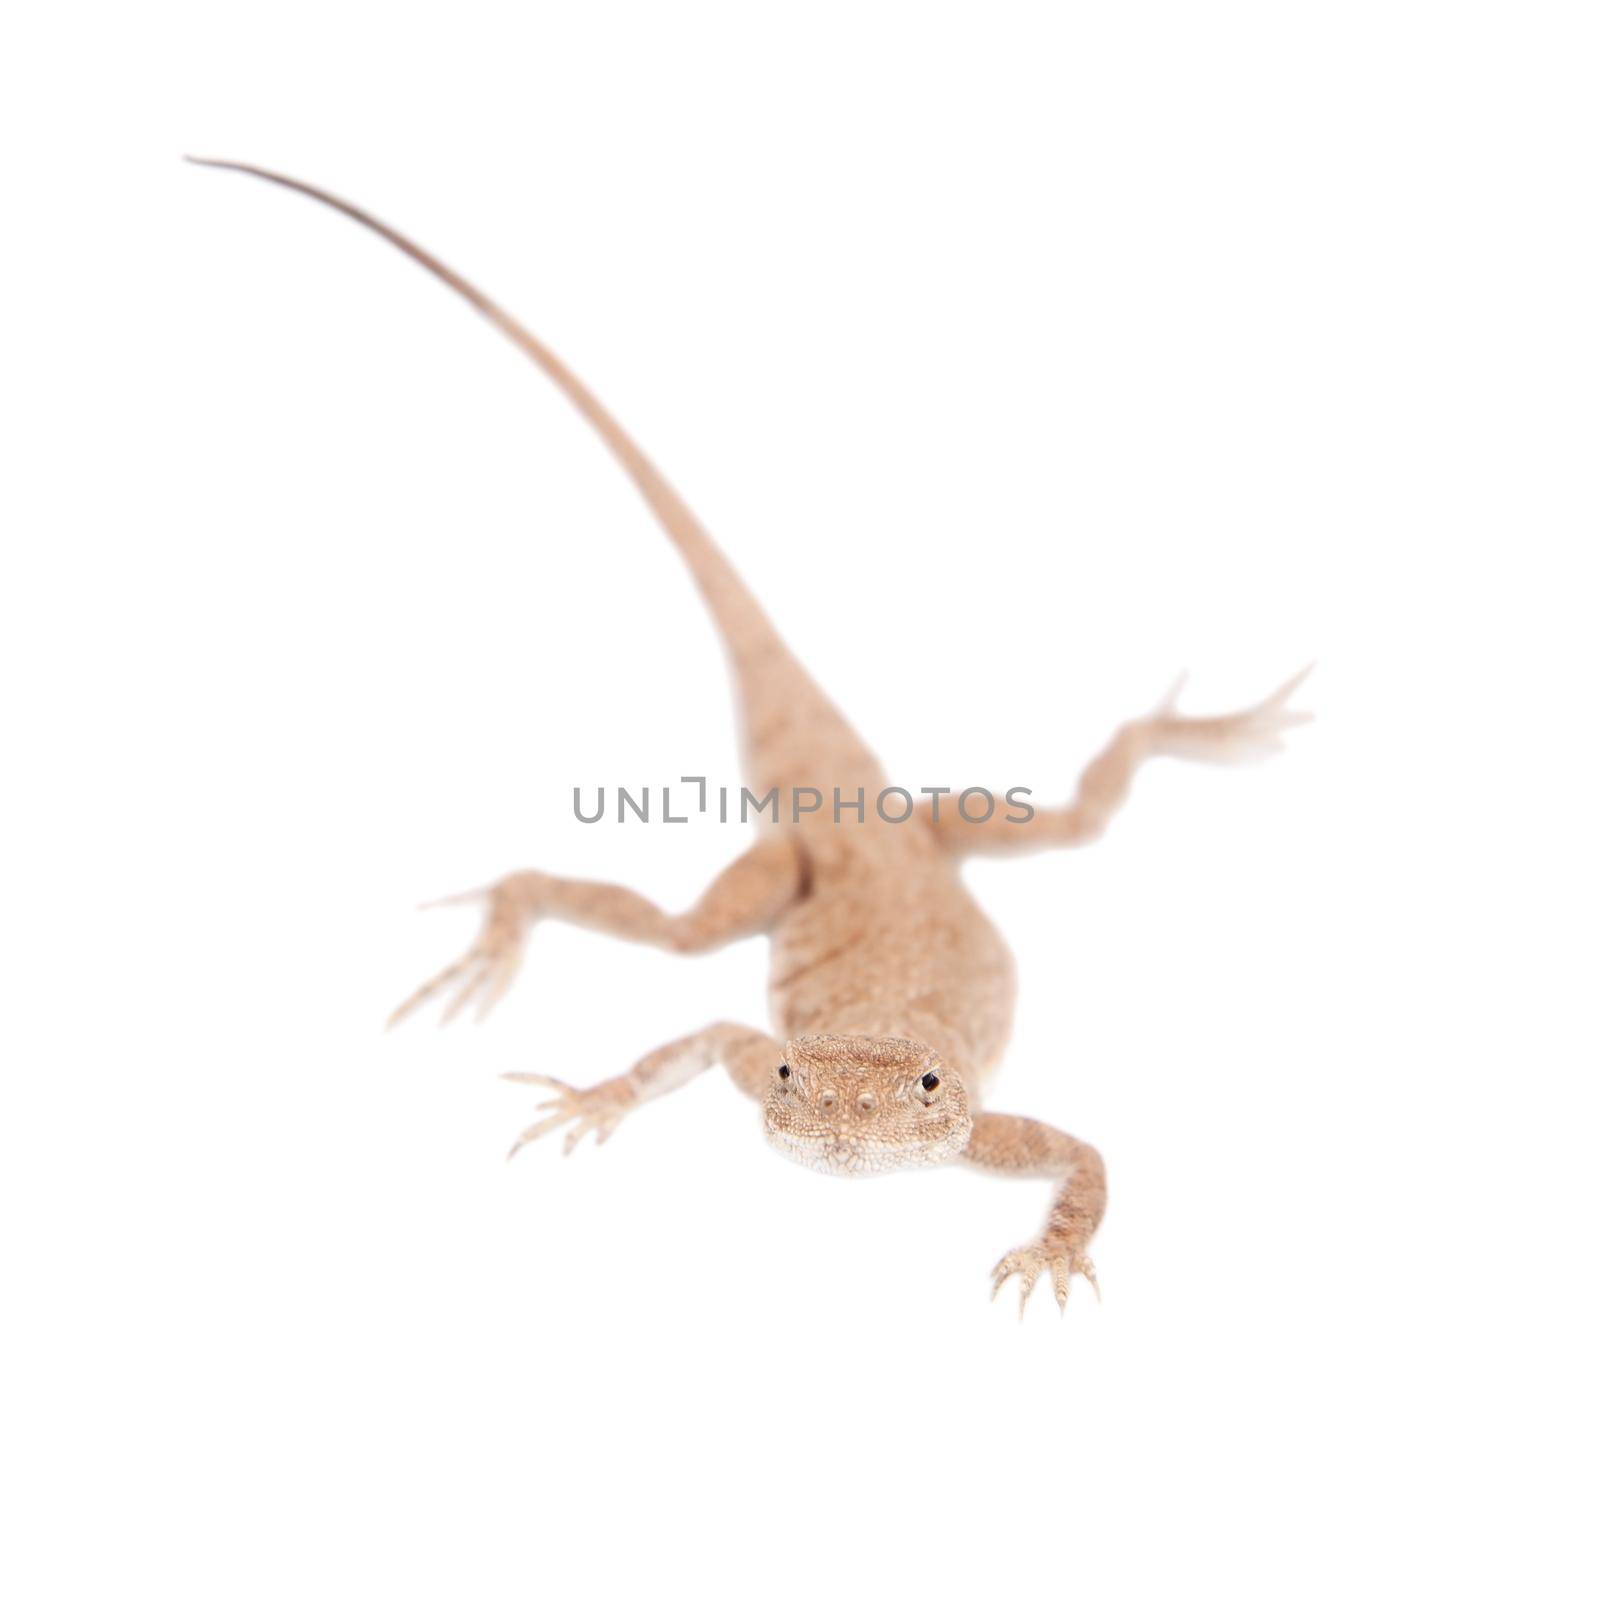 Secret Toad-Headed Agama, Phrynocephalus mystaceus, isolated on white